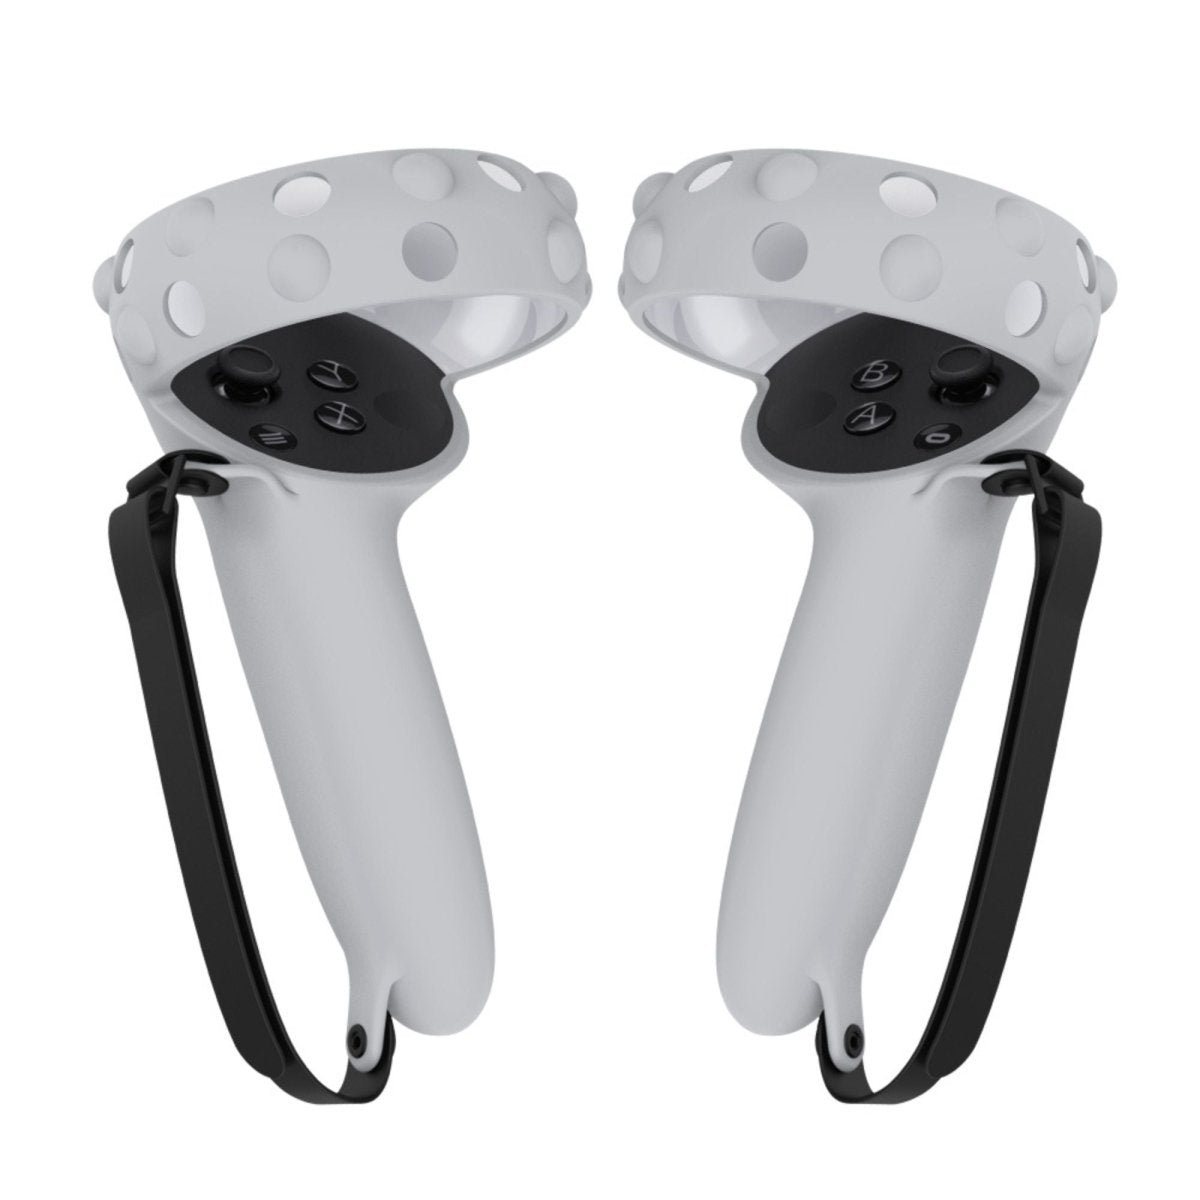 Estuche protector de empuñaduras de controlador Vr para Meta Quest 3,  protector de controlador de silicona suave para empuñaduras de  controladores Oculus Quest 3